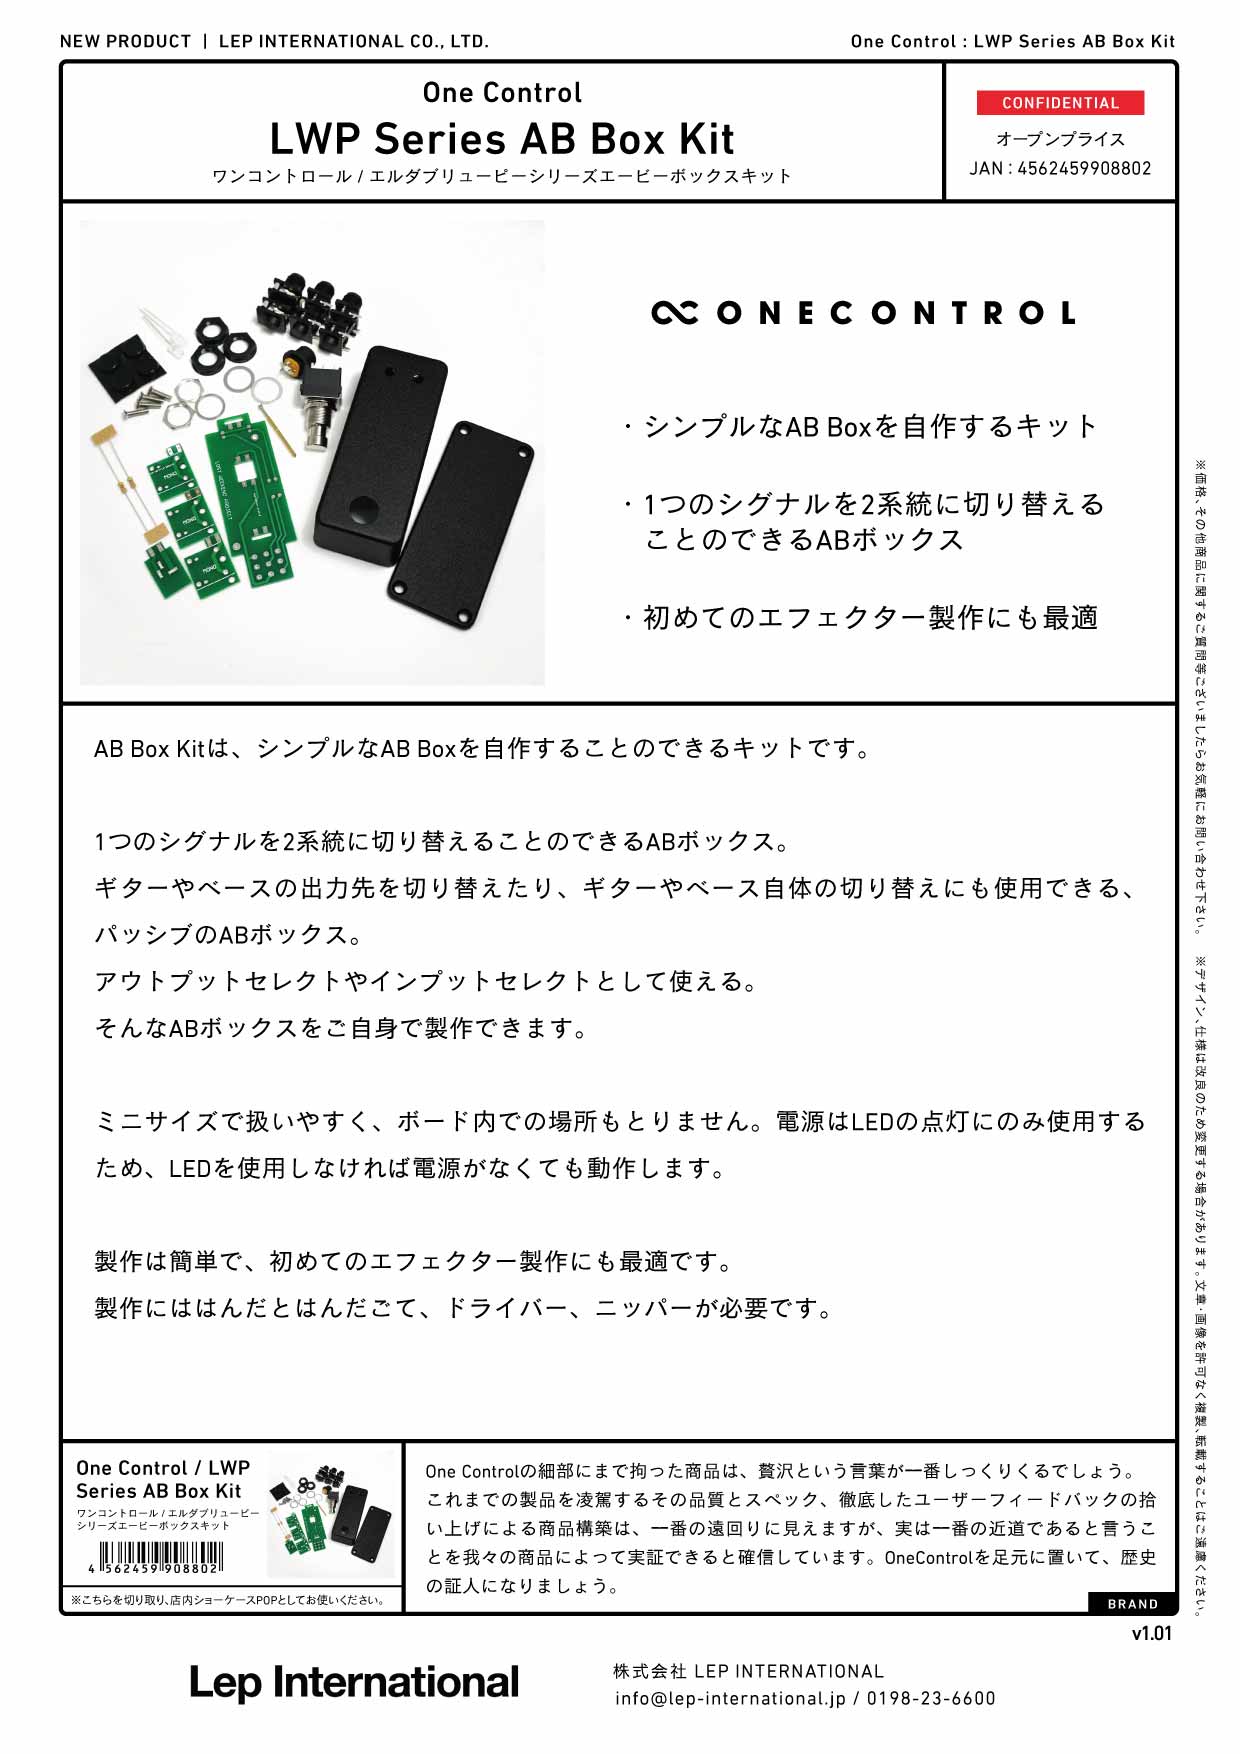 One Control / LWP Series AB Box Kit